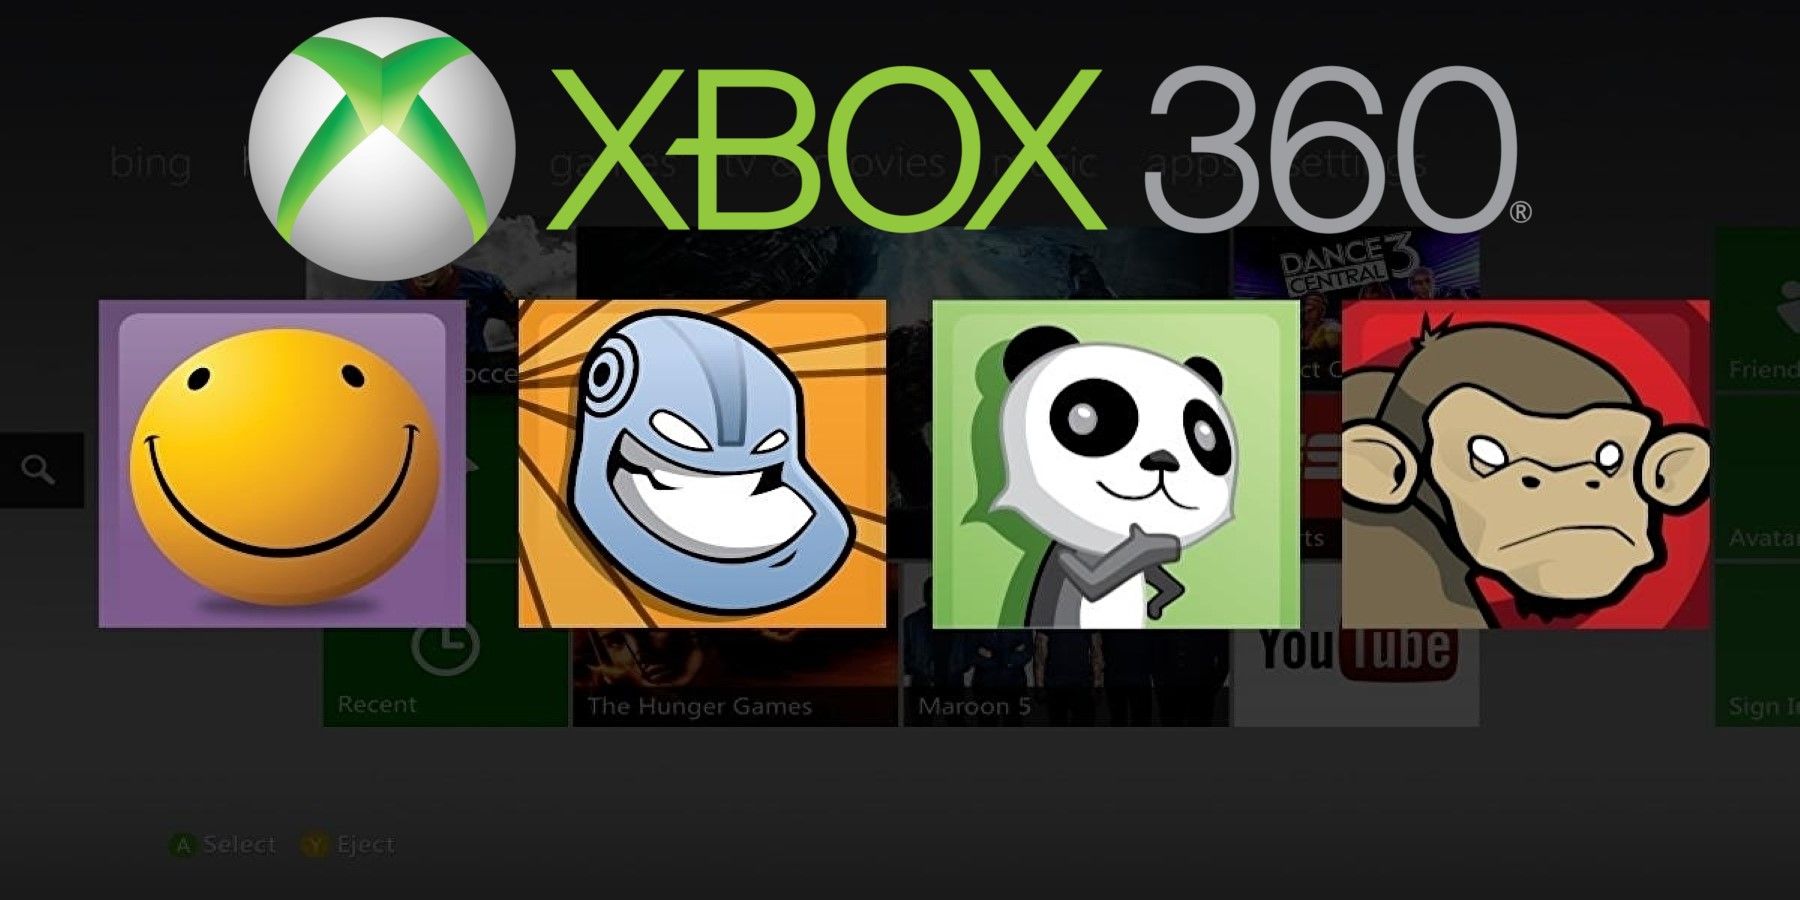 Xbox 360 Gamerpics Batch 1 by K1D on Newgrounds